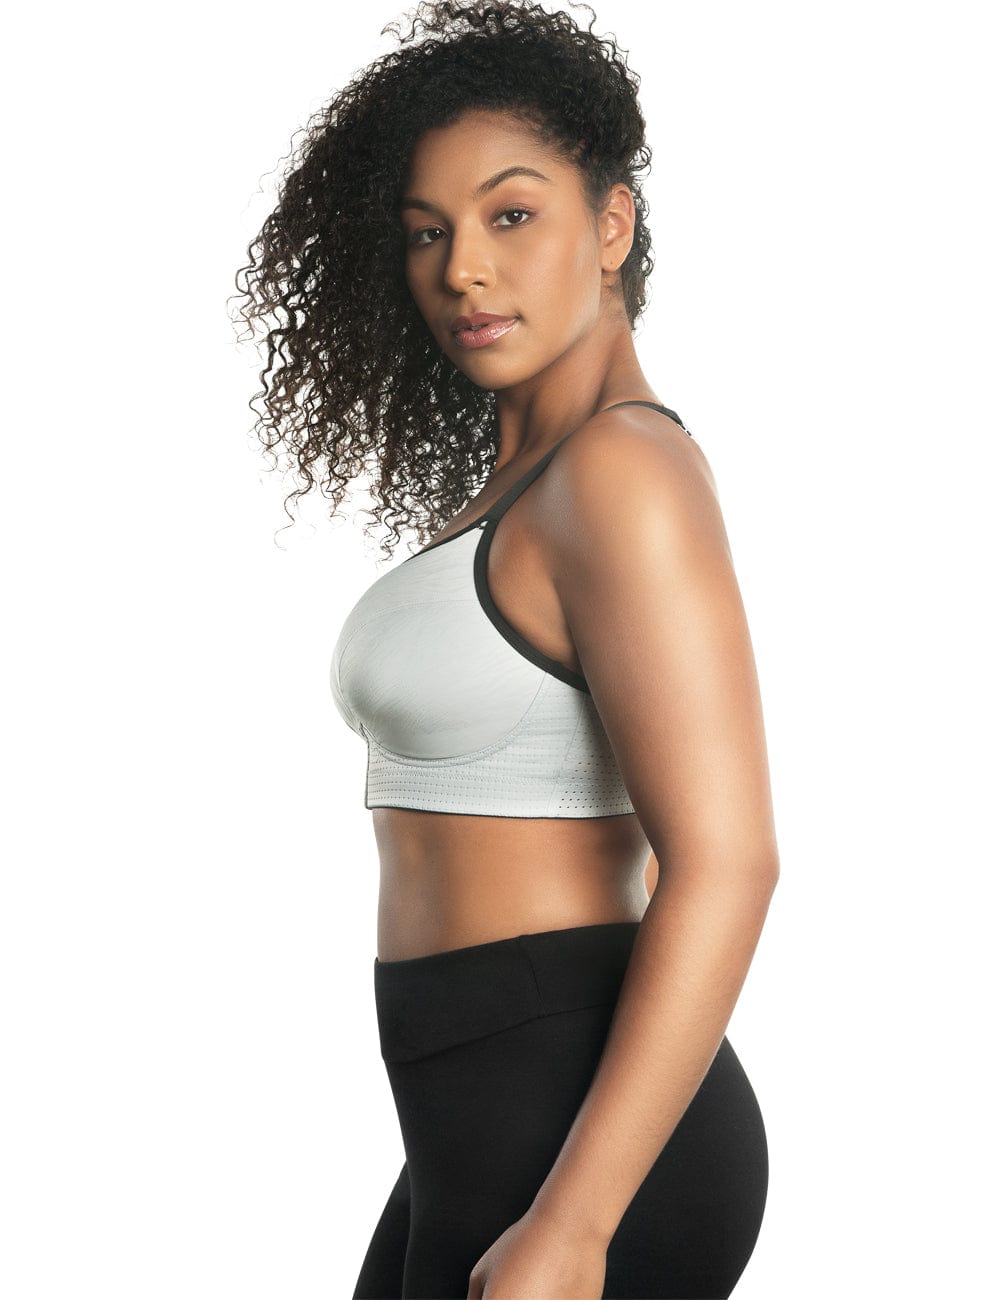 Women Sports Bras Tights Crop Top Yoga Vest Front Zipper Plus Size